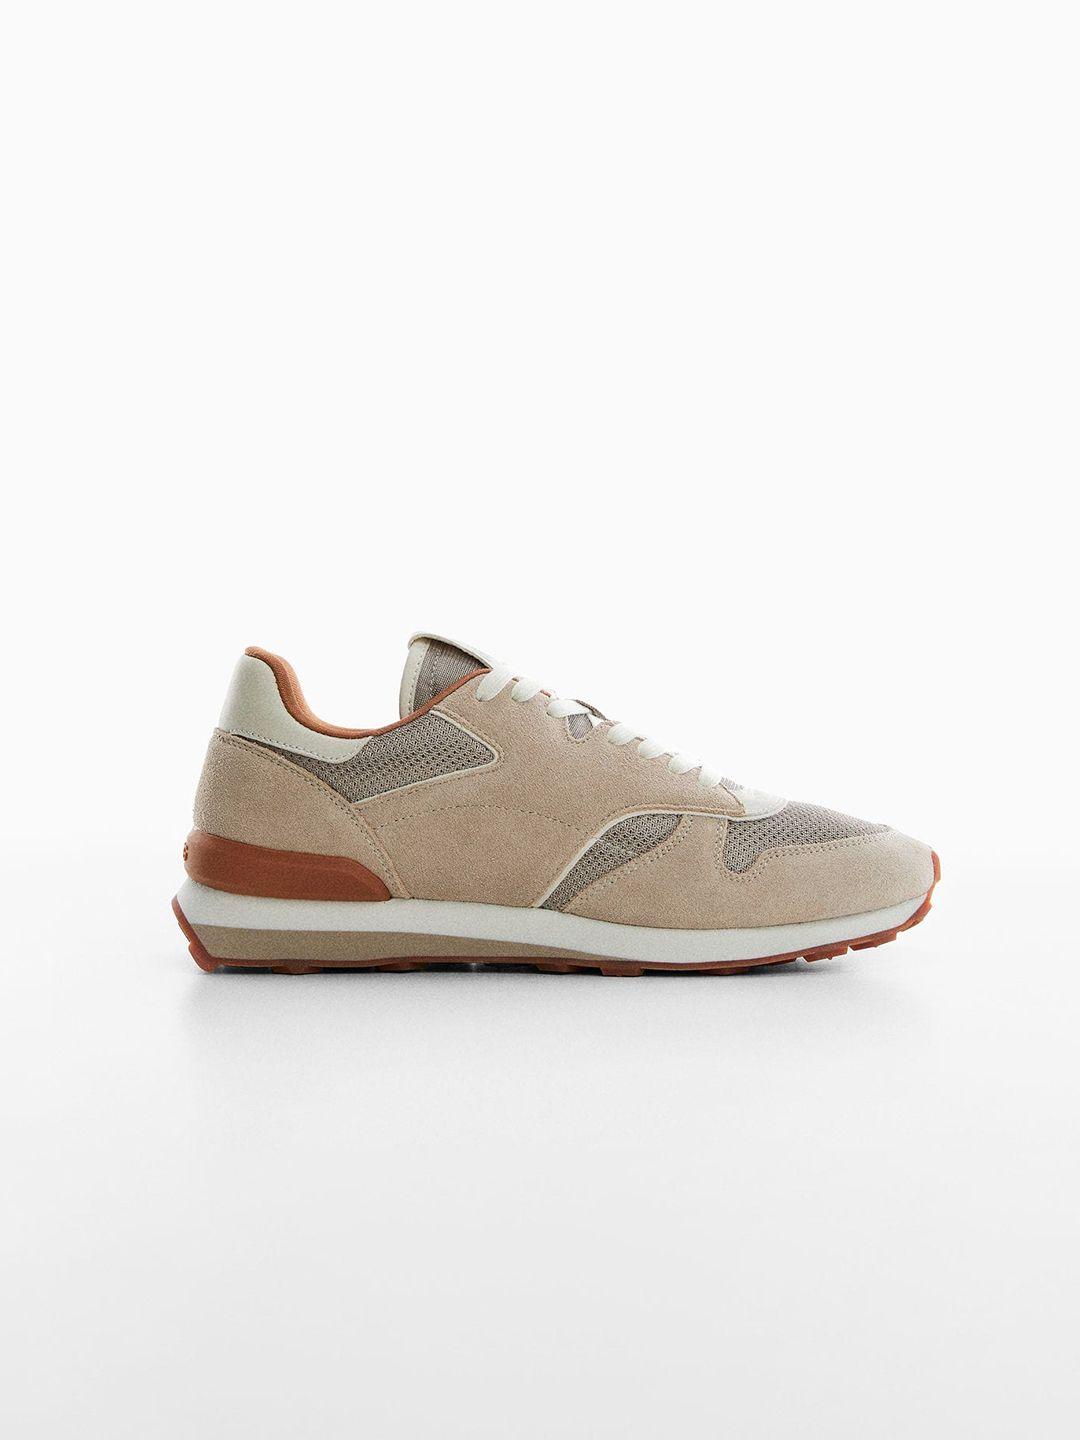 mango-man-woven-design-sustainable-maraton-sports-shoes